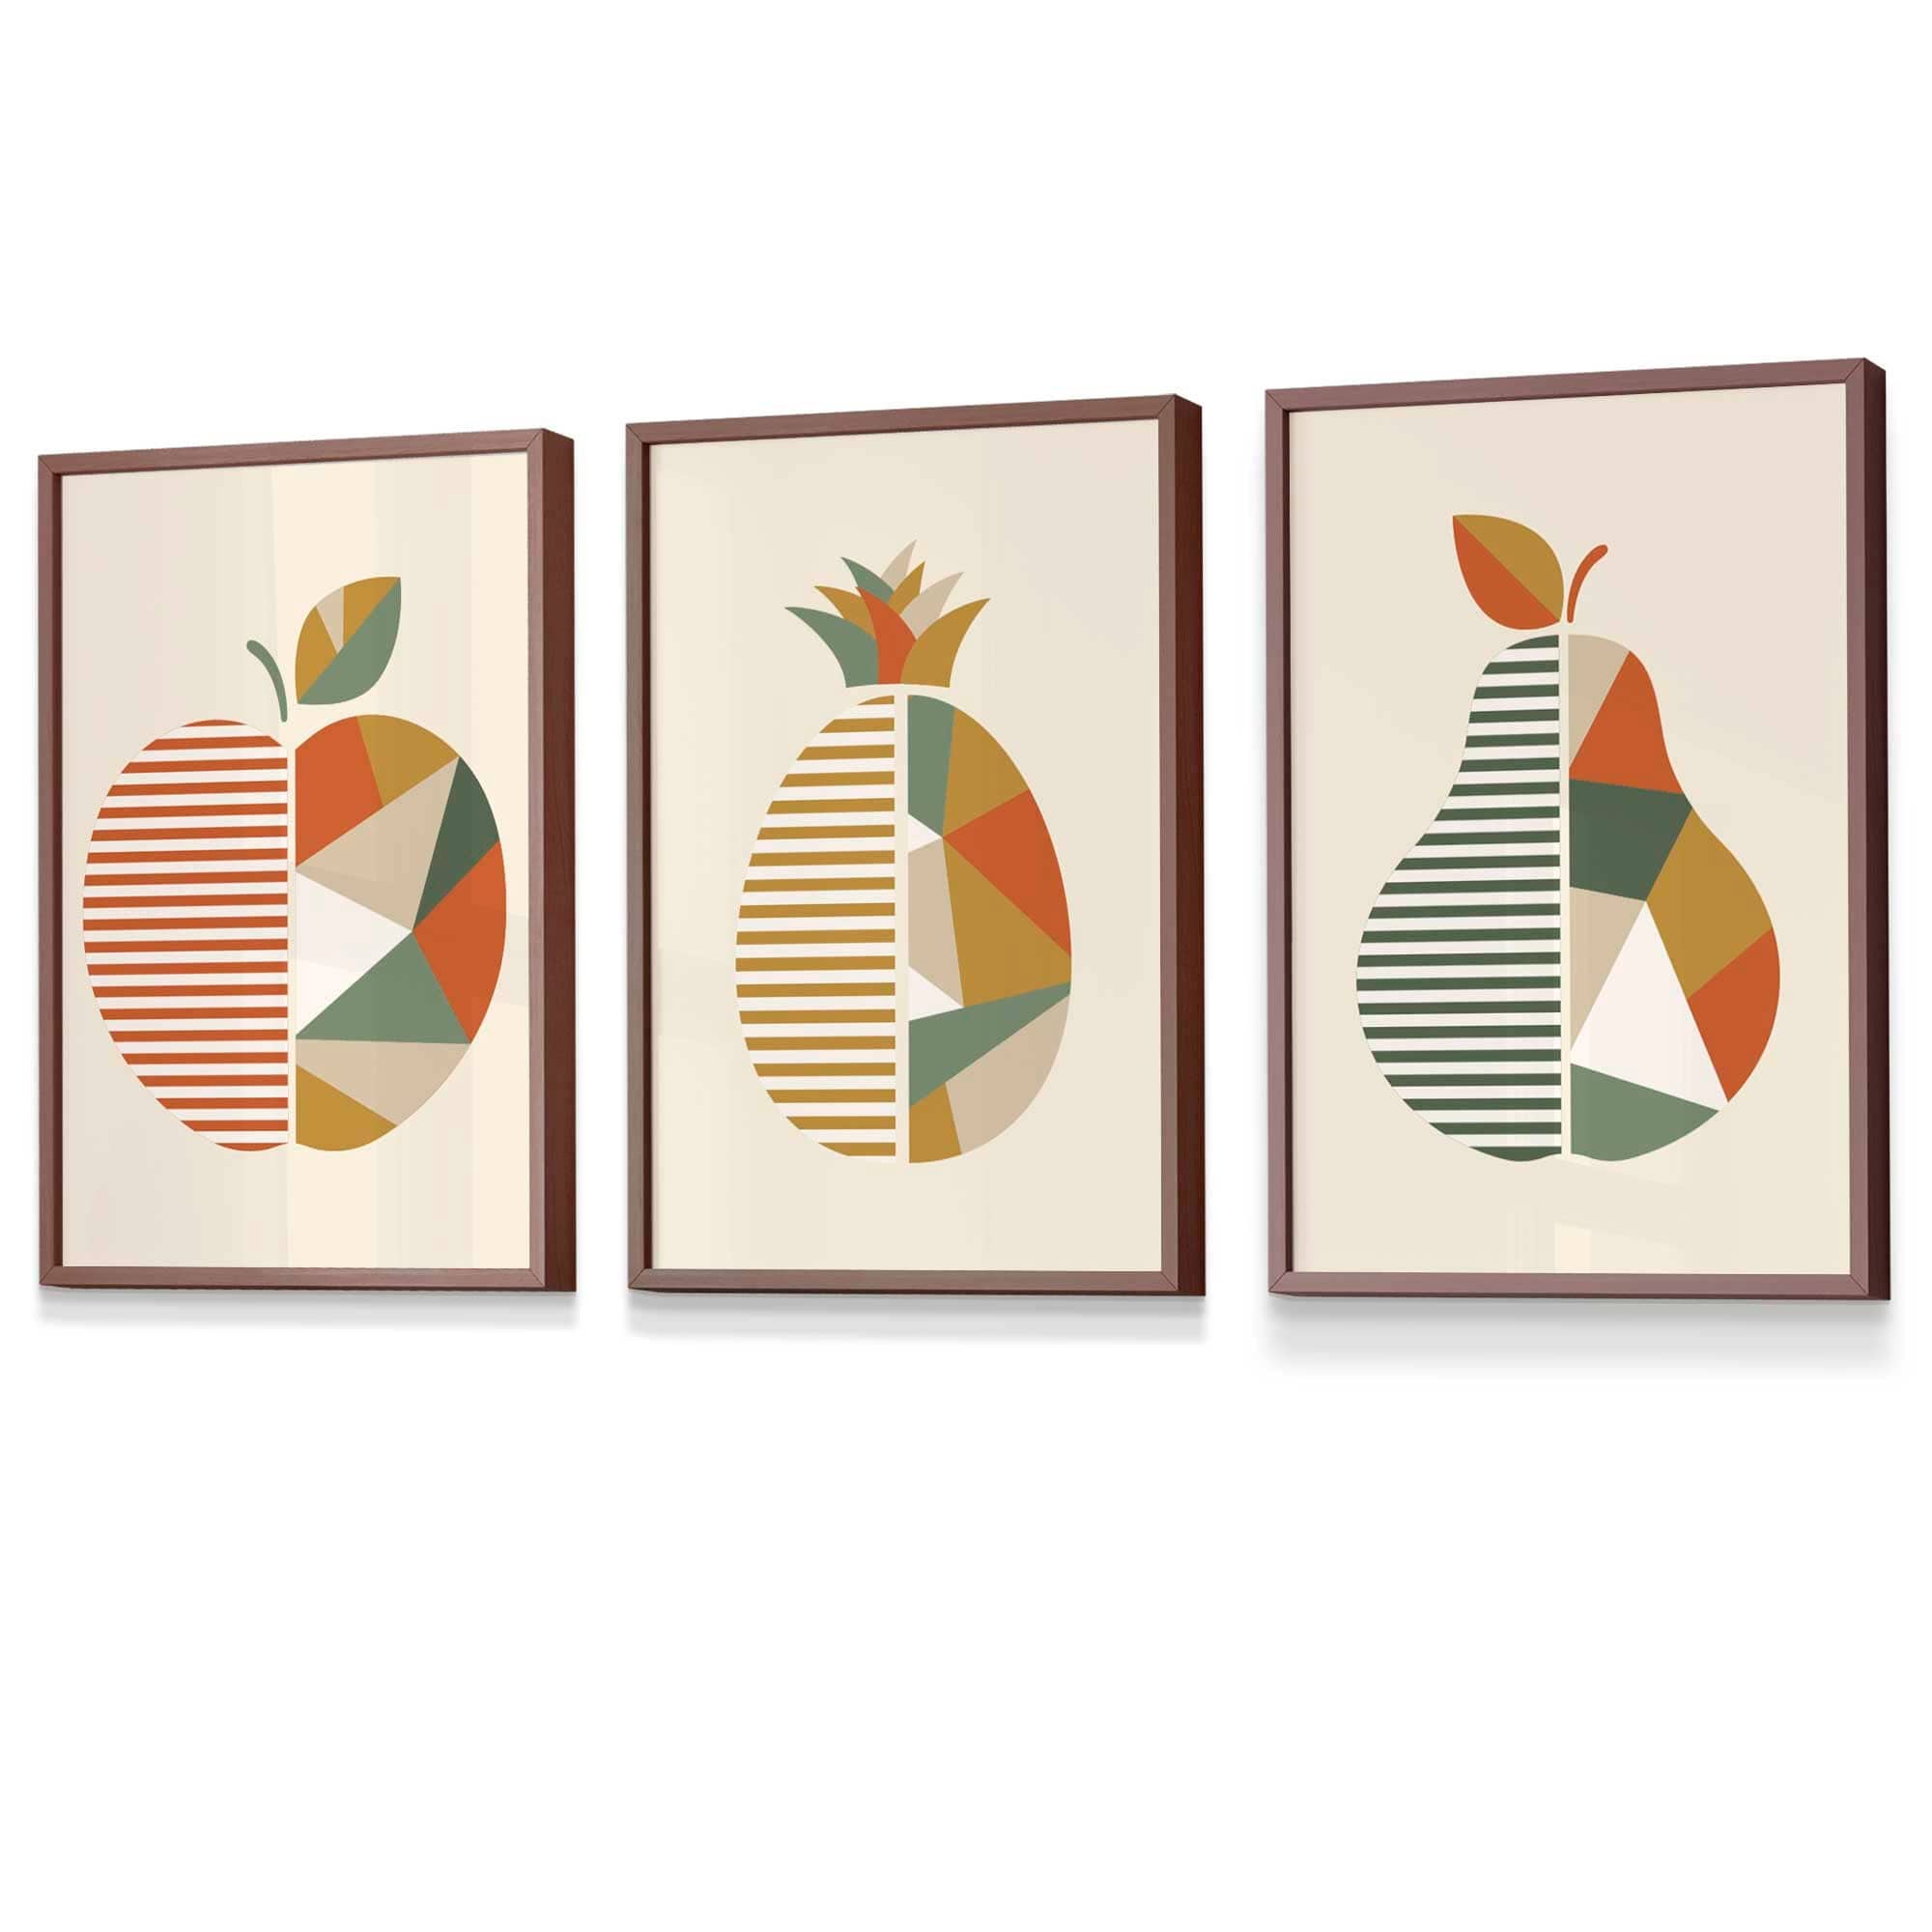 Set of 3 Framed Autumn Geometric Apple Pear Fruit Wall Art in Sage Green, Beige and Orange | Artze Wall Art UK